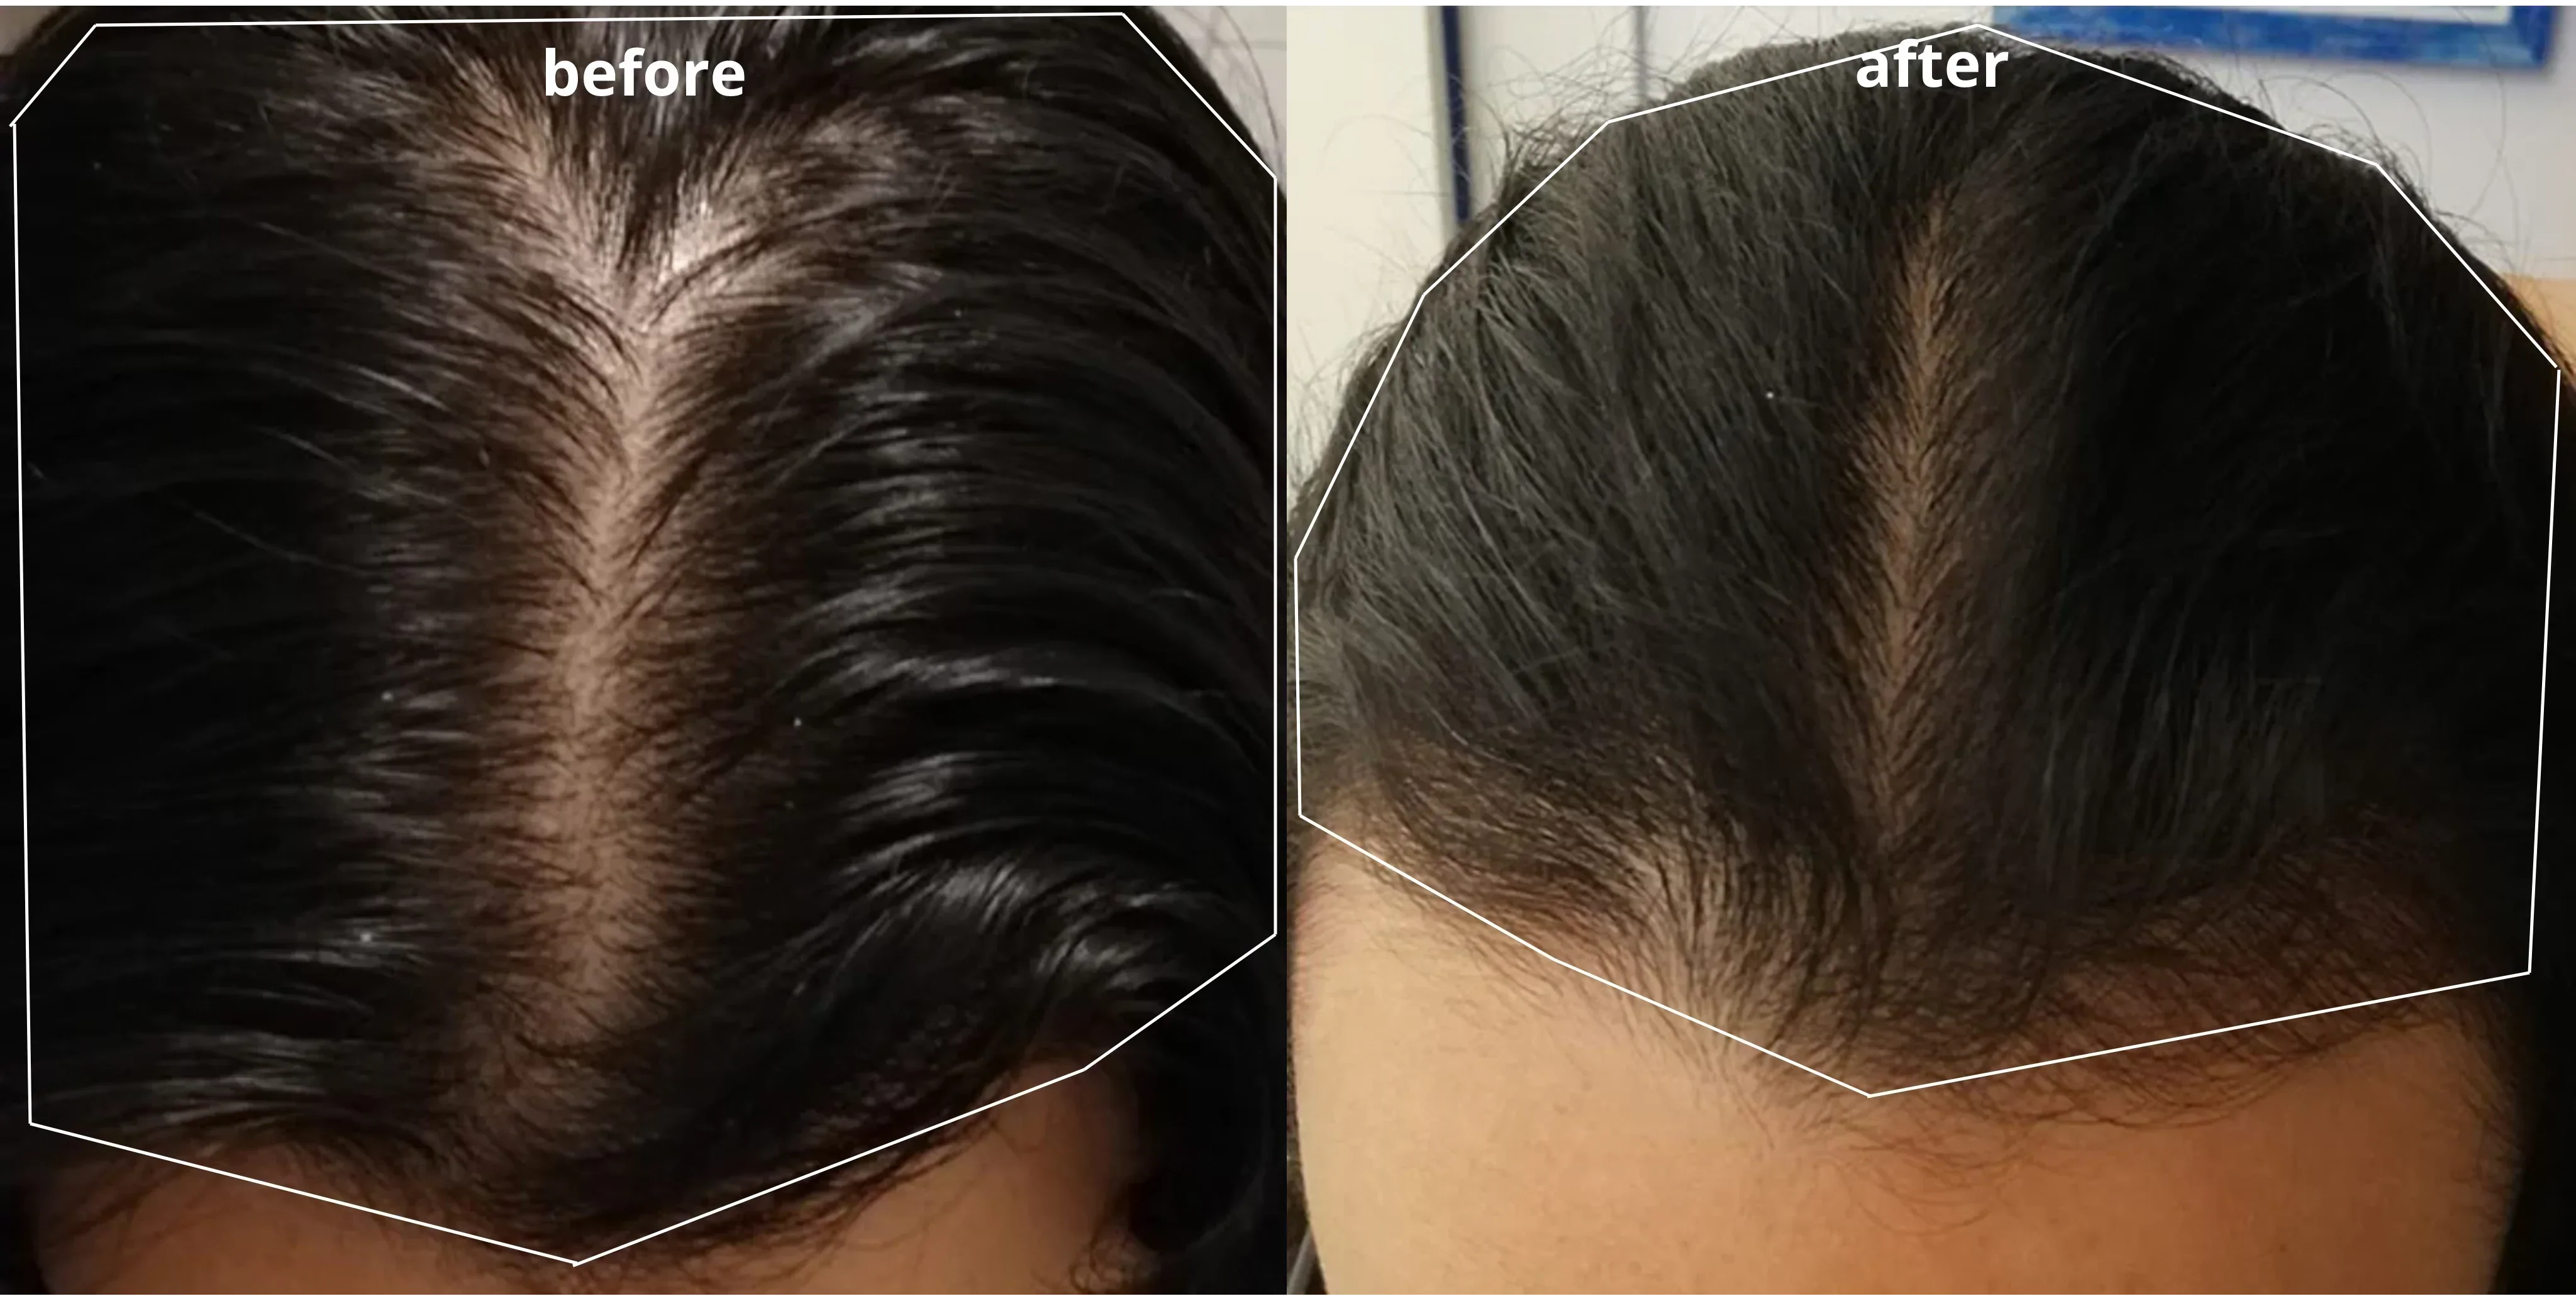 patterned hair loss, hair thinning